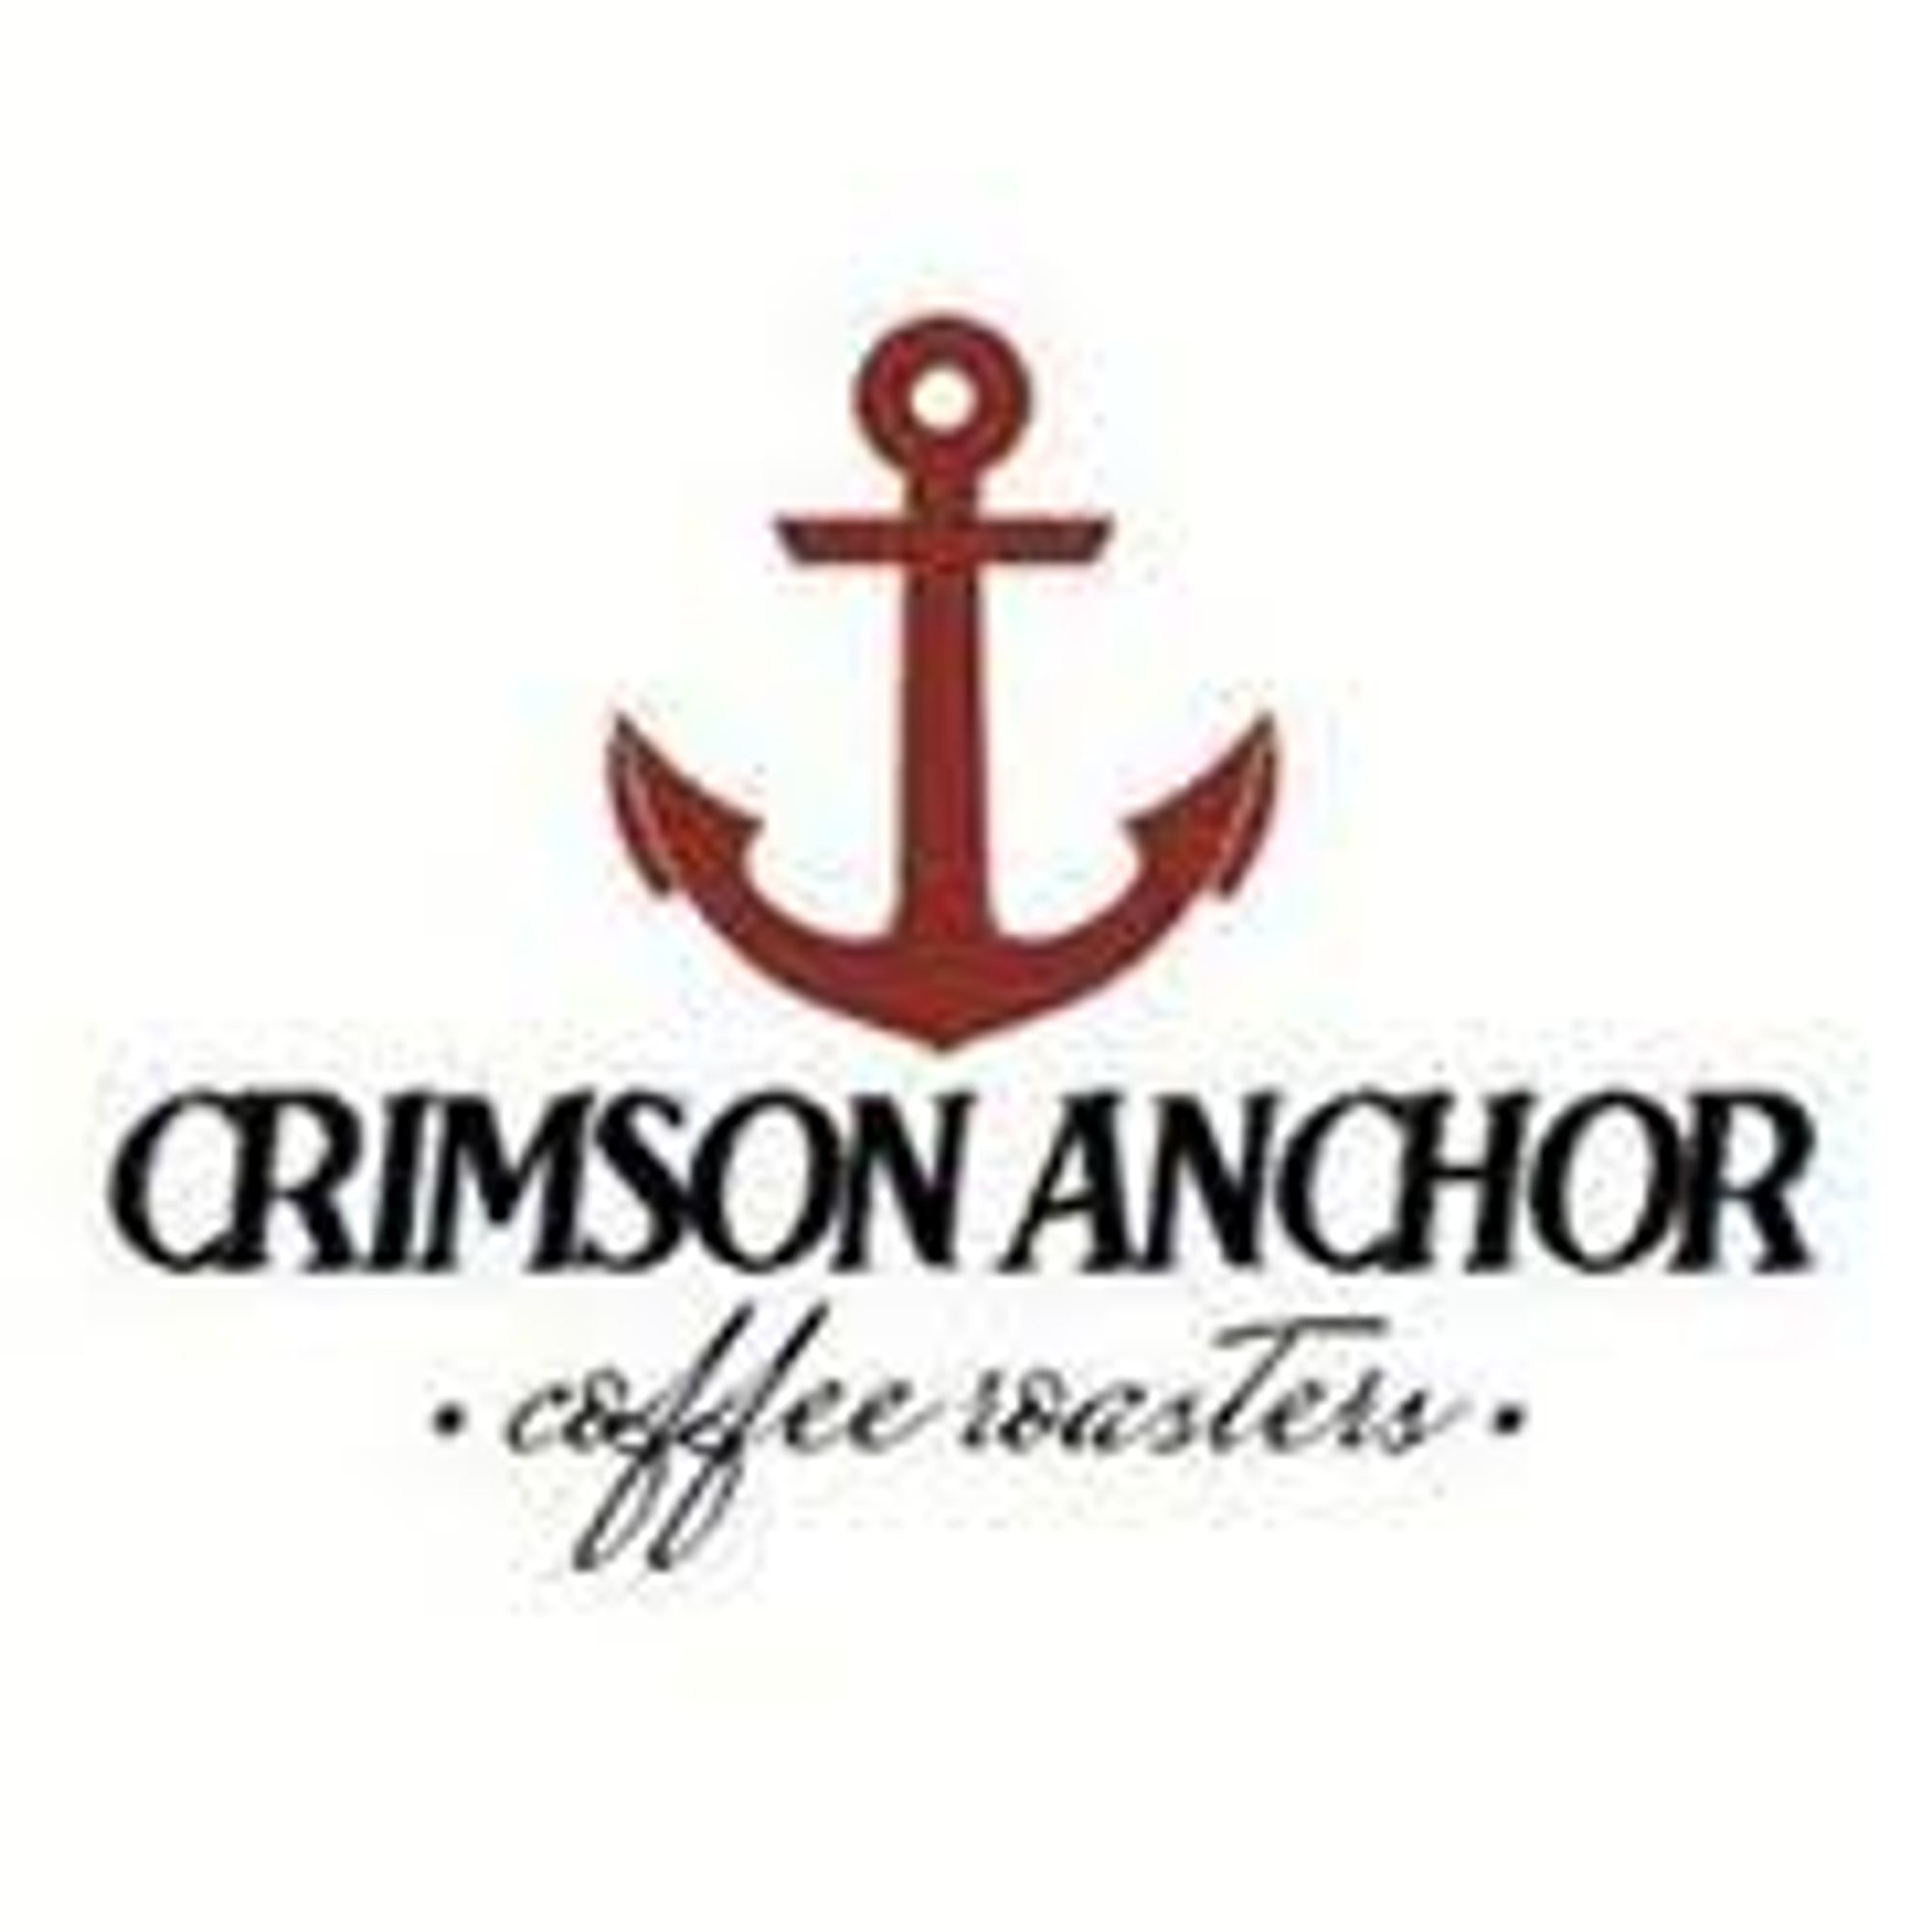 Crimson Anchor Coffee Roasters